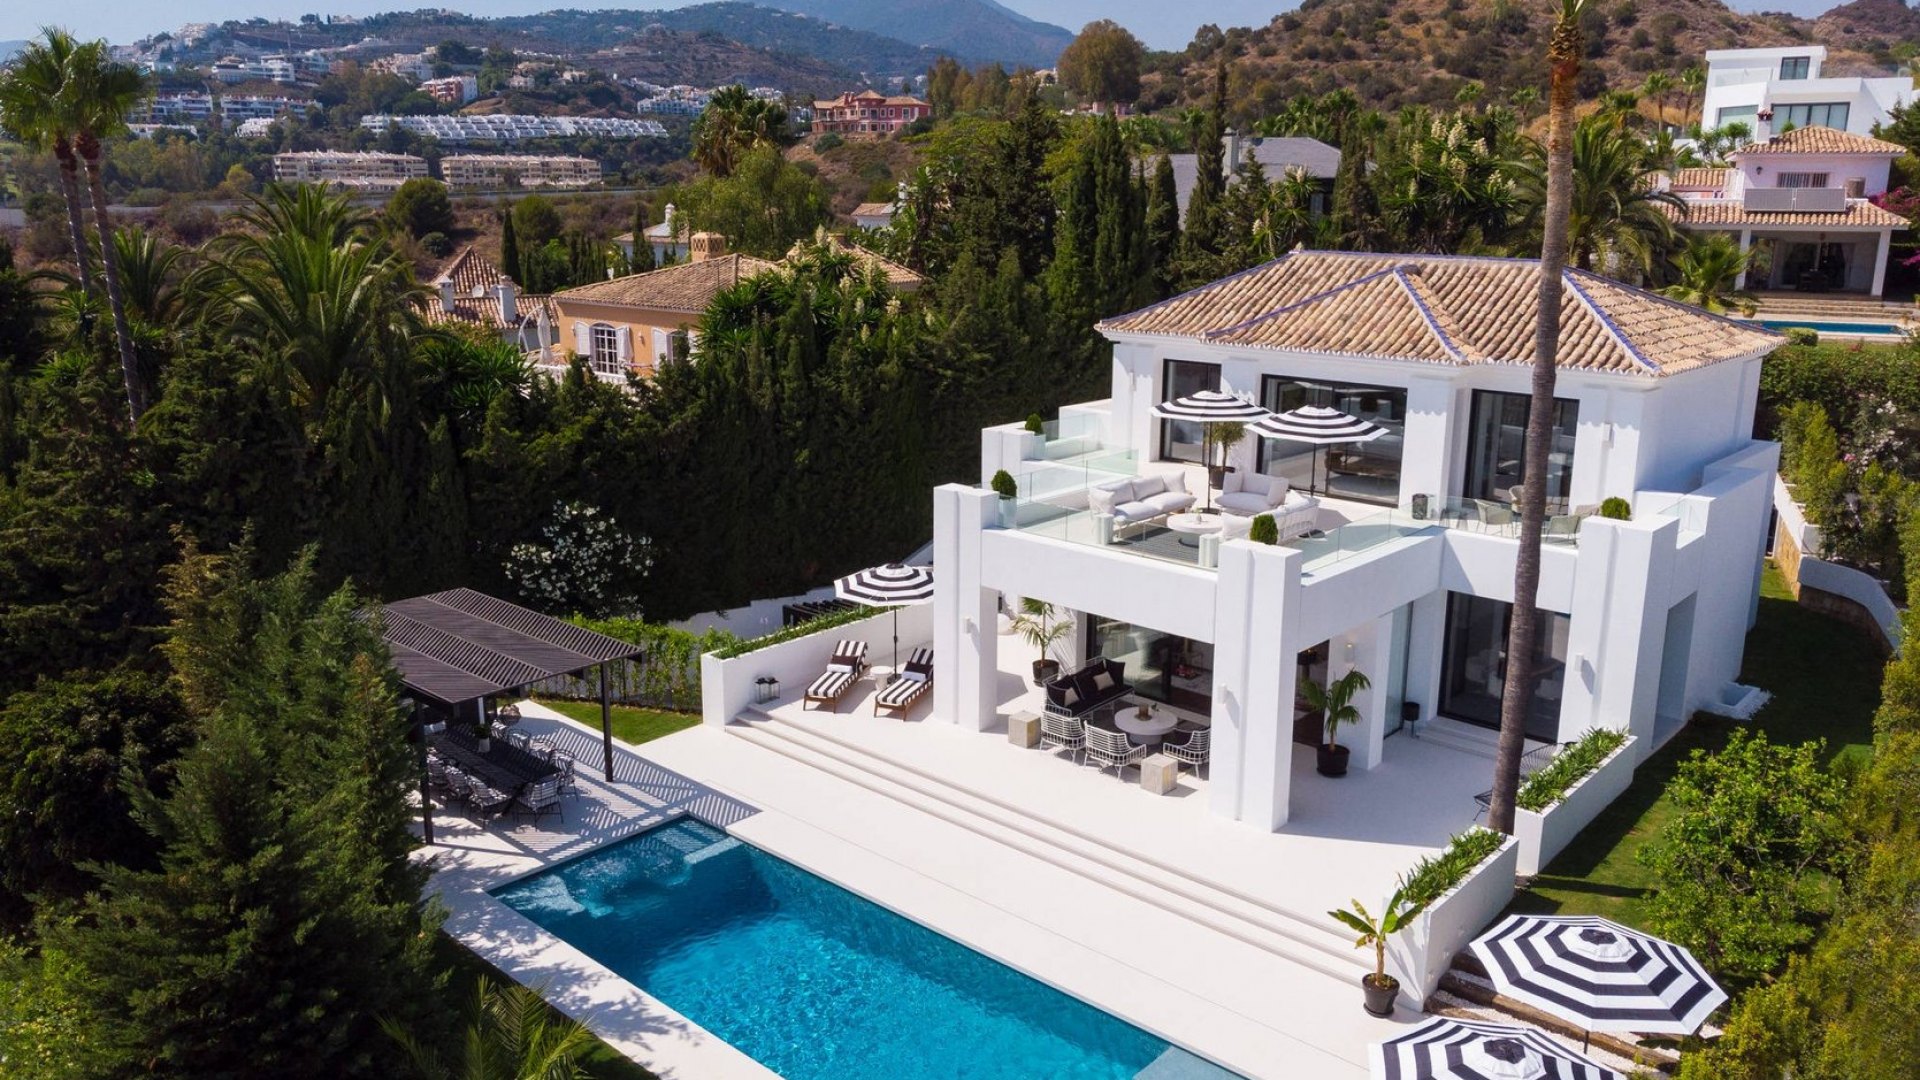 Spectacular designer villa with panoramic views in Los Naranjos